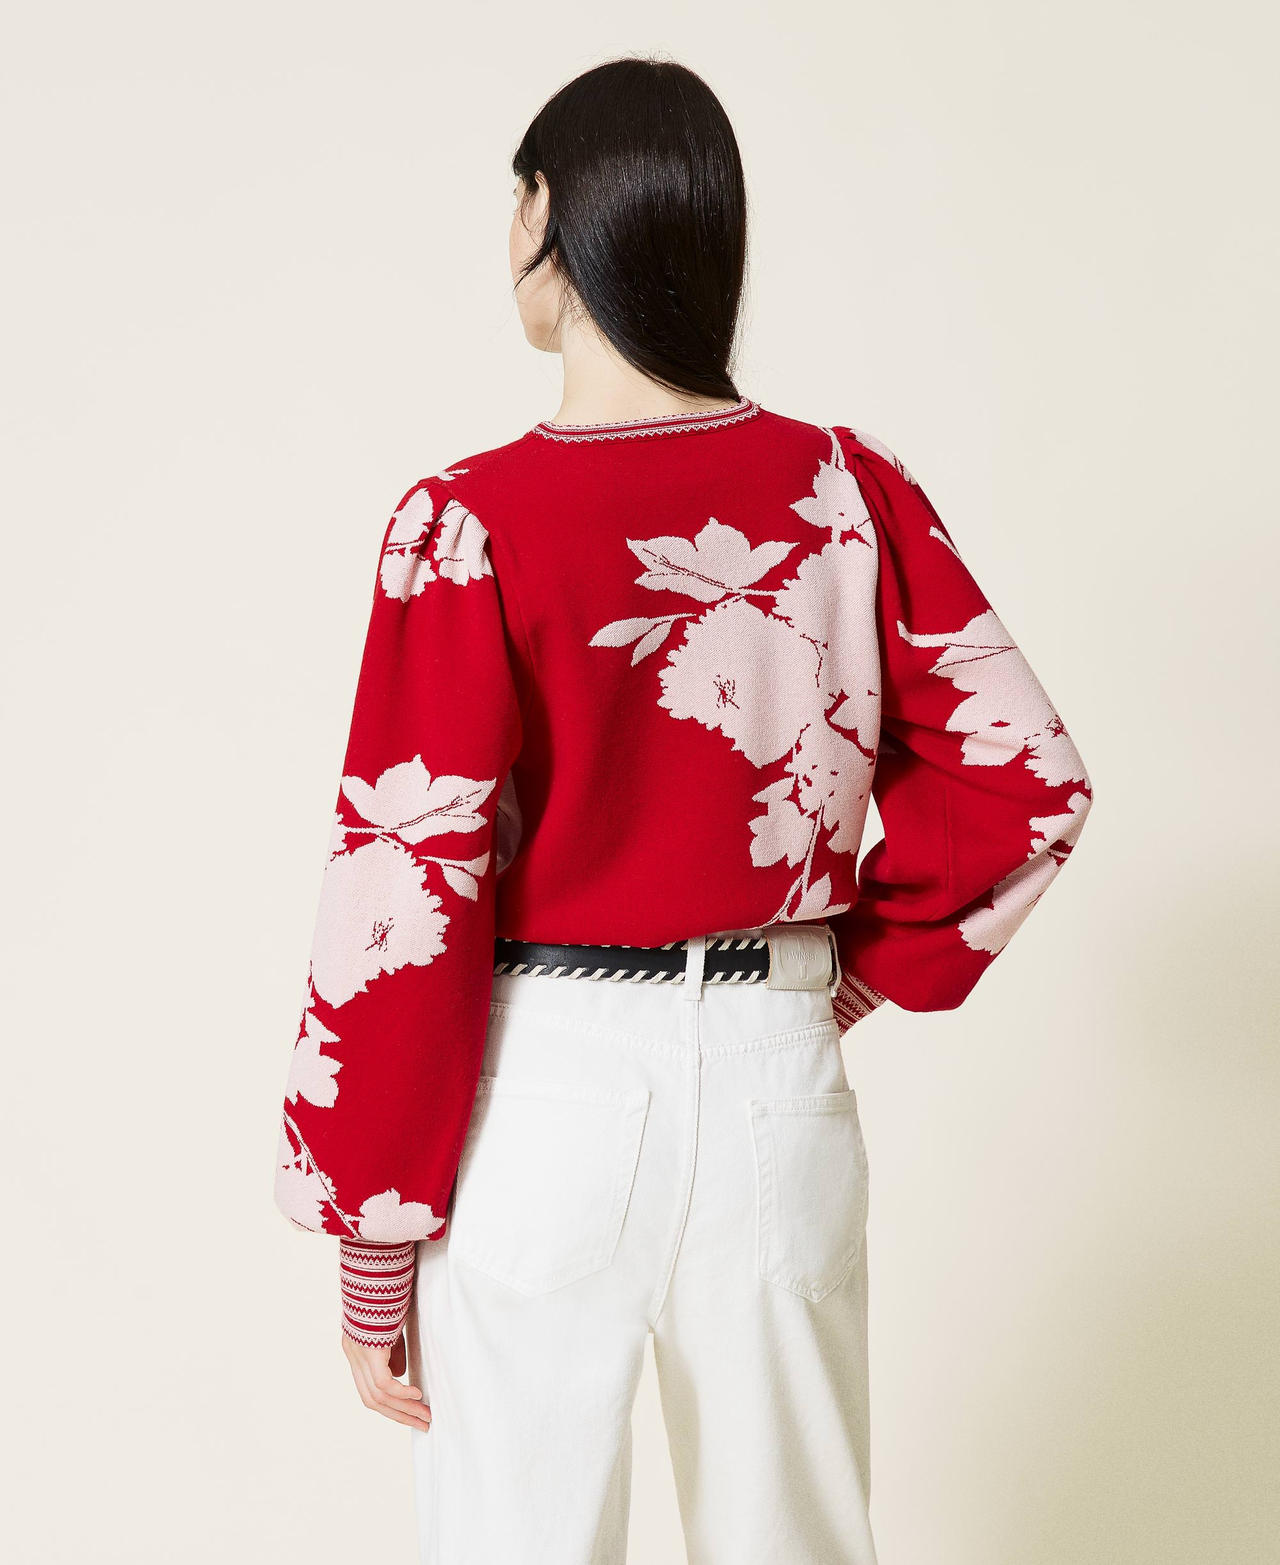 Jacquard floral jumper “Geranium” Red / Light Canyon Woman 212TP3541-03